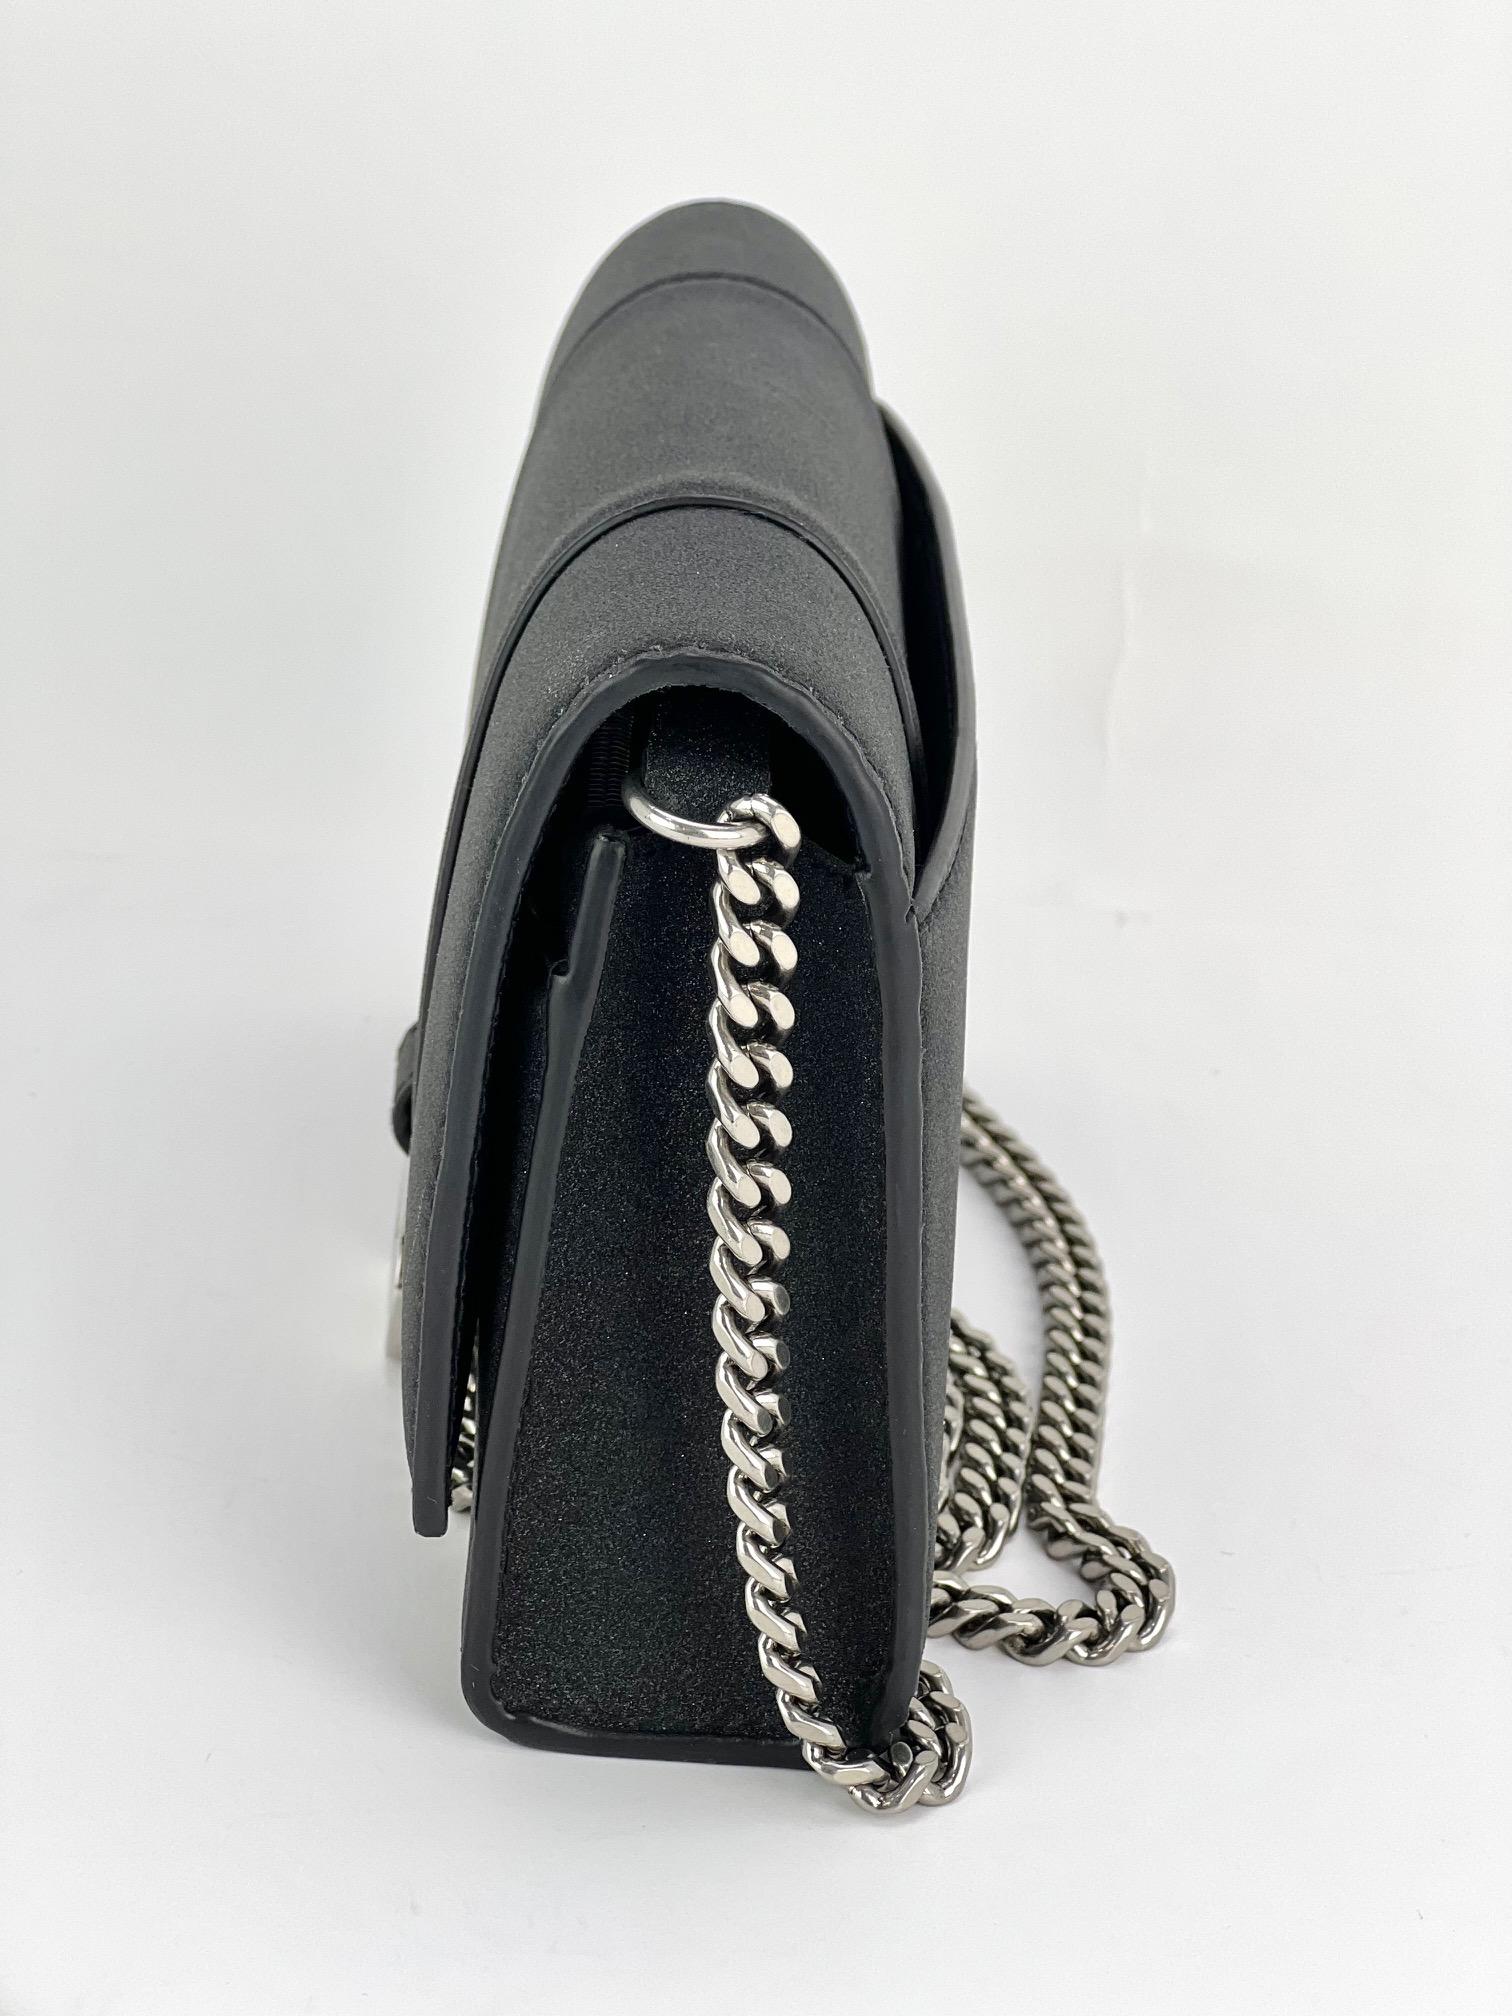 BALENCIAGA Hourglass Wallet On Chain Black Glitter Clutch Shoulder Bag For Sale 7